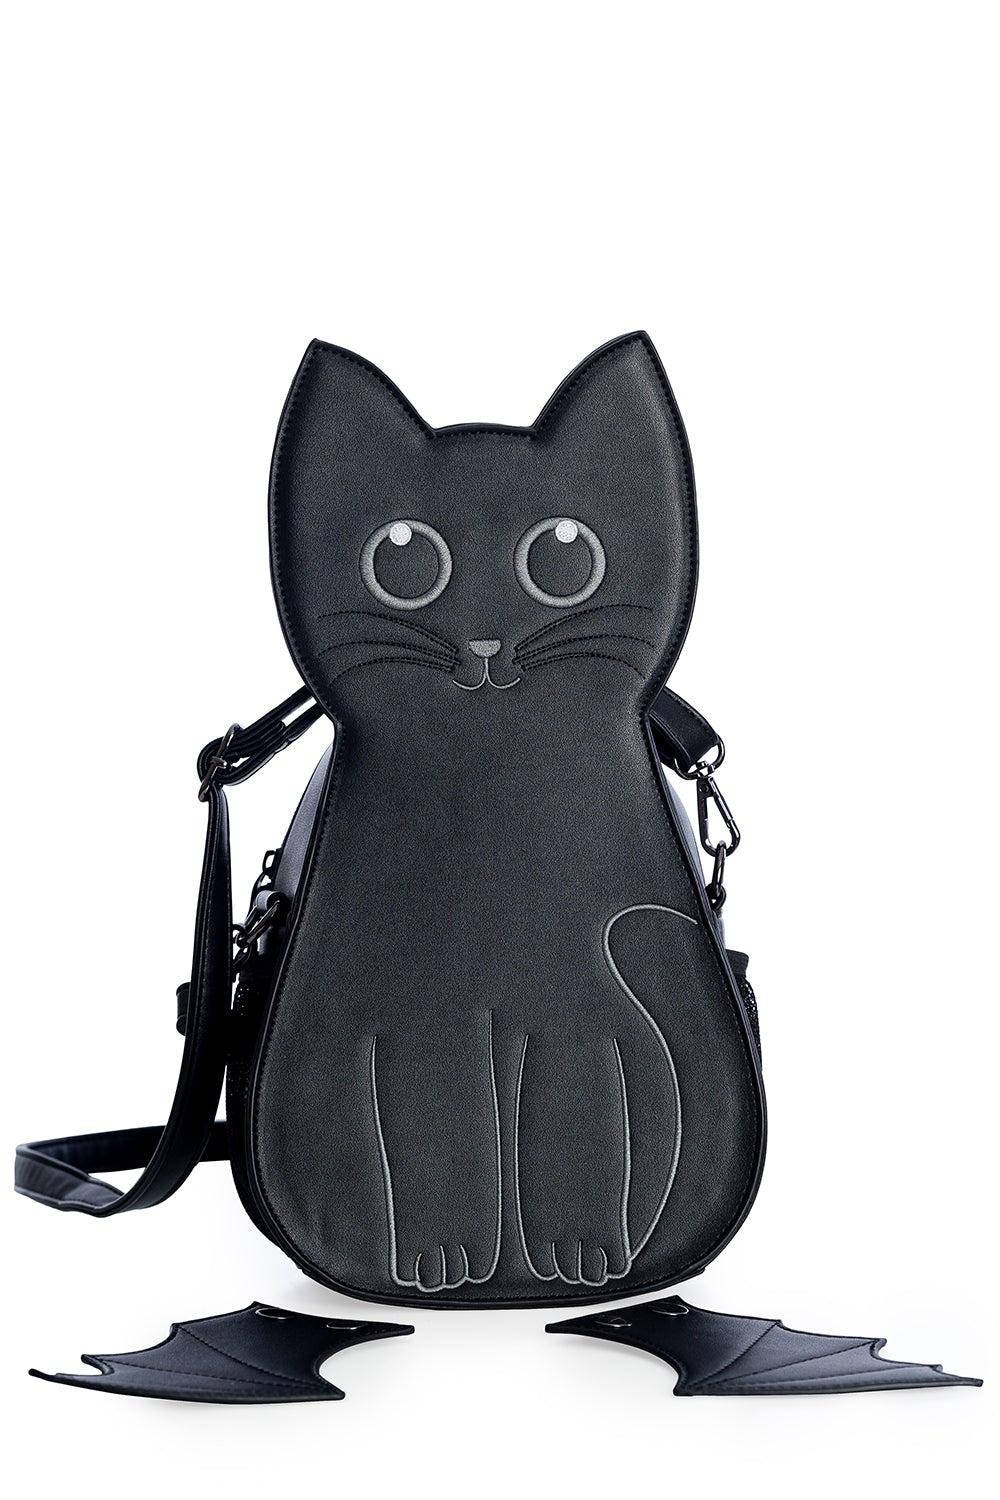 Cat shaped handbag with detachable bat wings in black. 